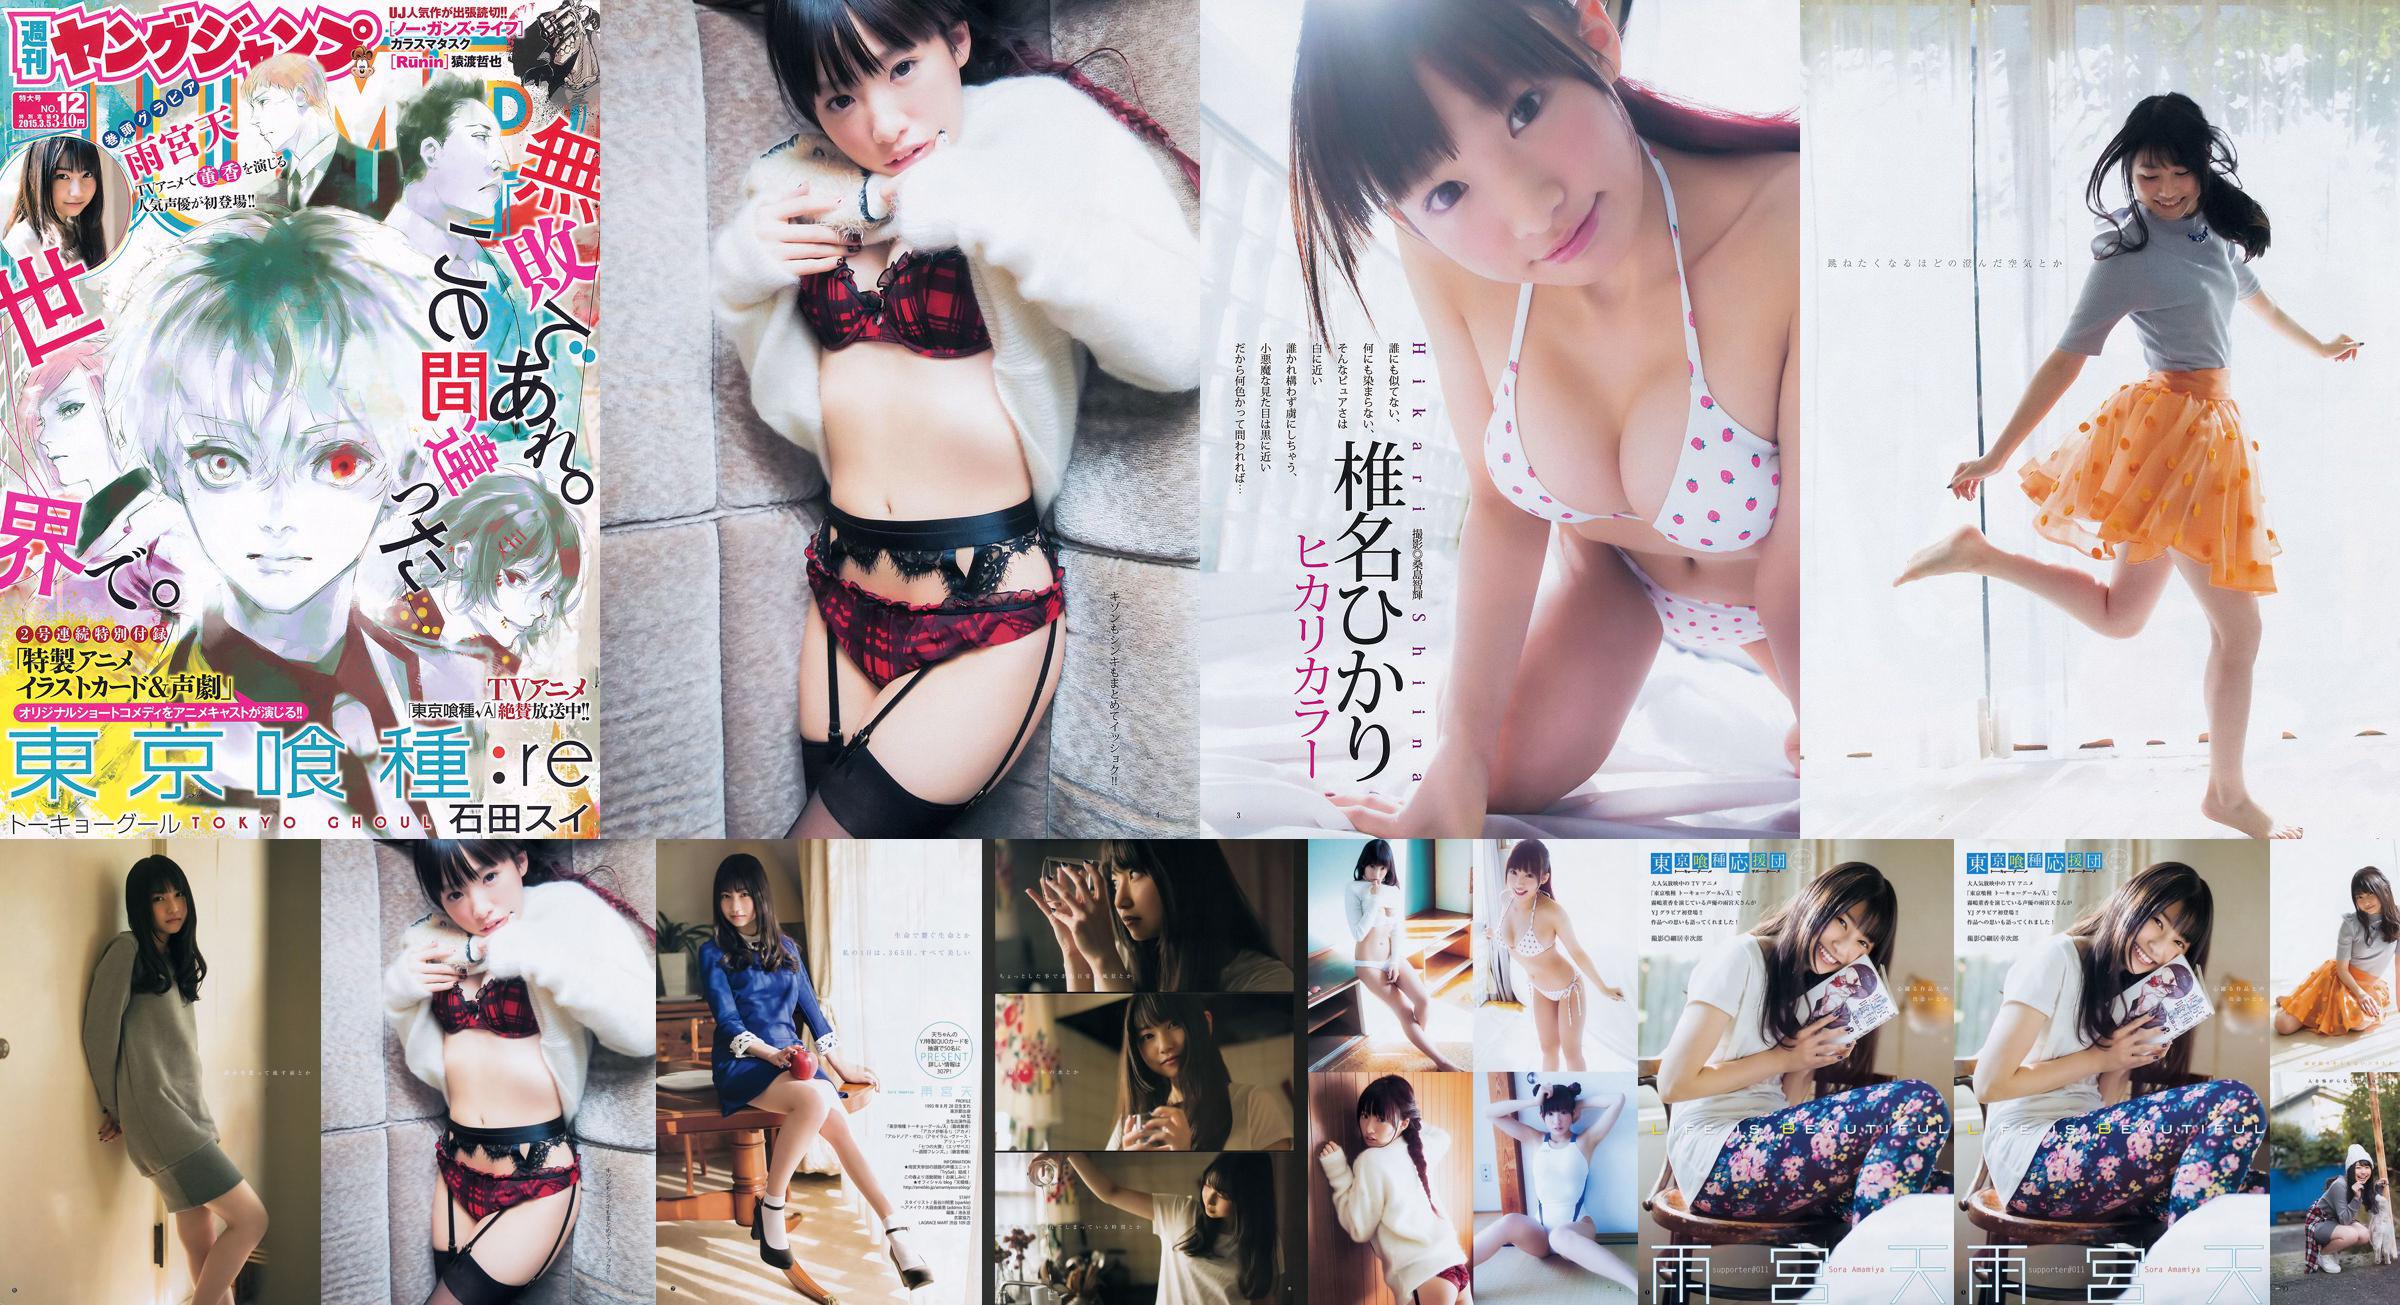 Amamiya Tian Shiina ひ か り [Jeune saut hebdomadaire] 2015 n ° 12 Photo Magazine No.97ddd2 Page 1